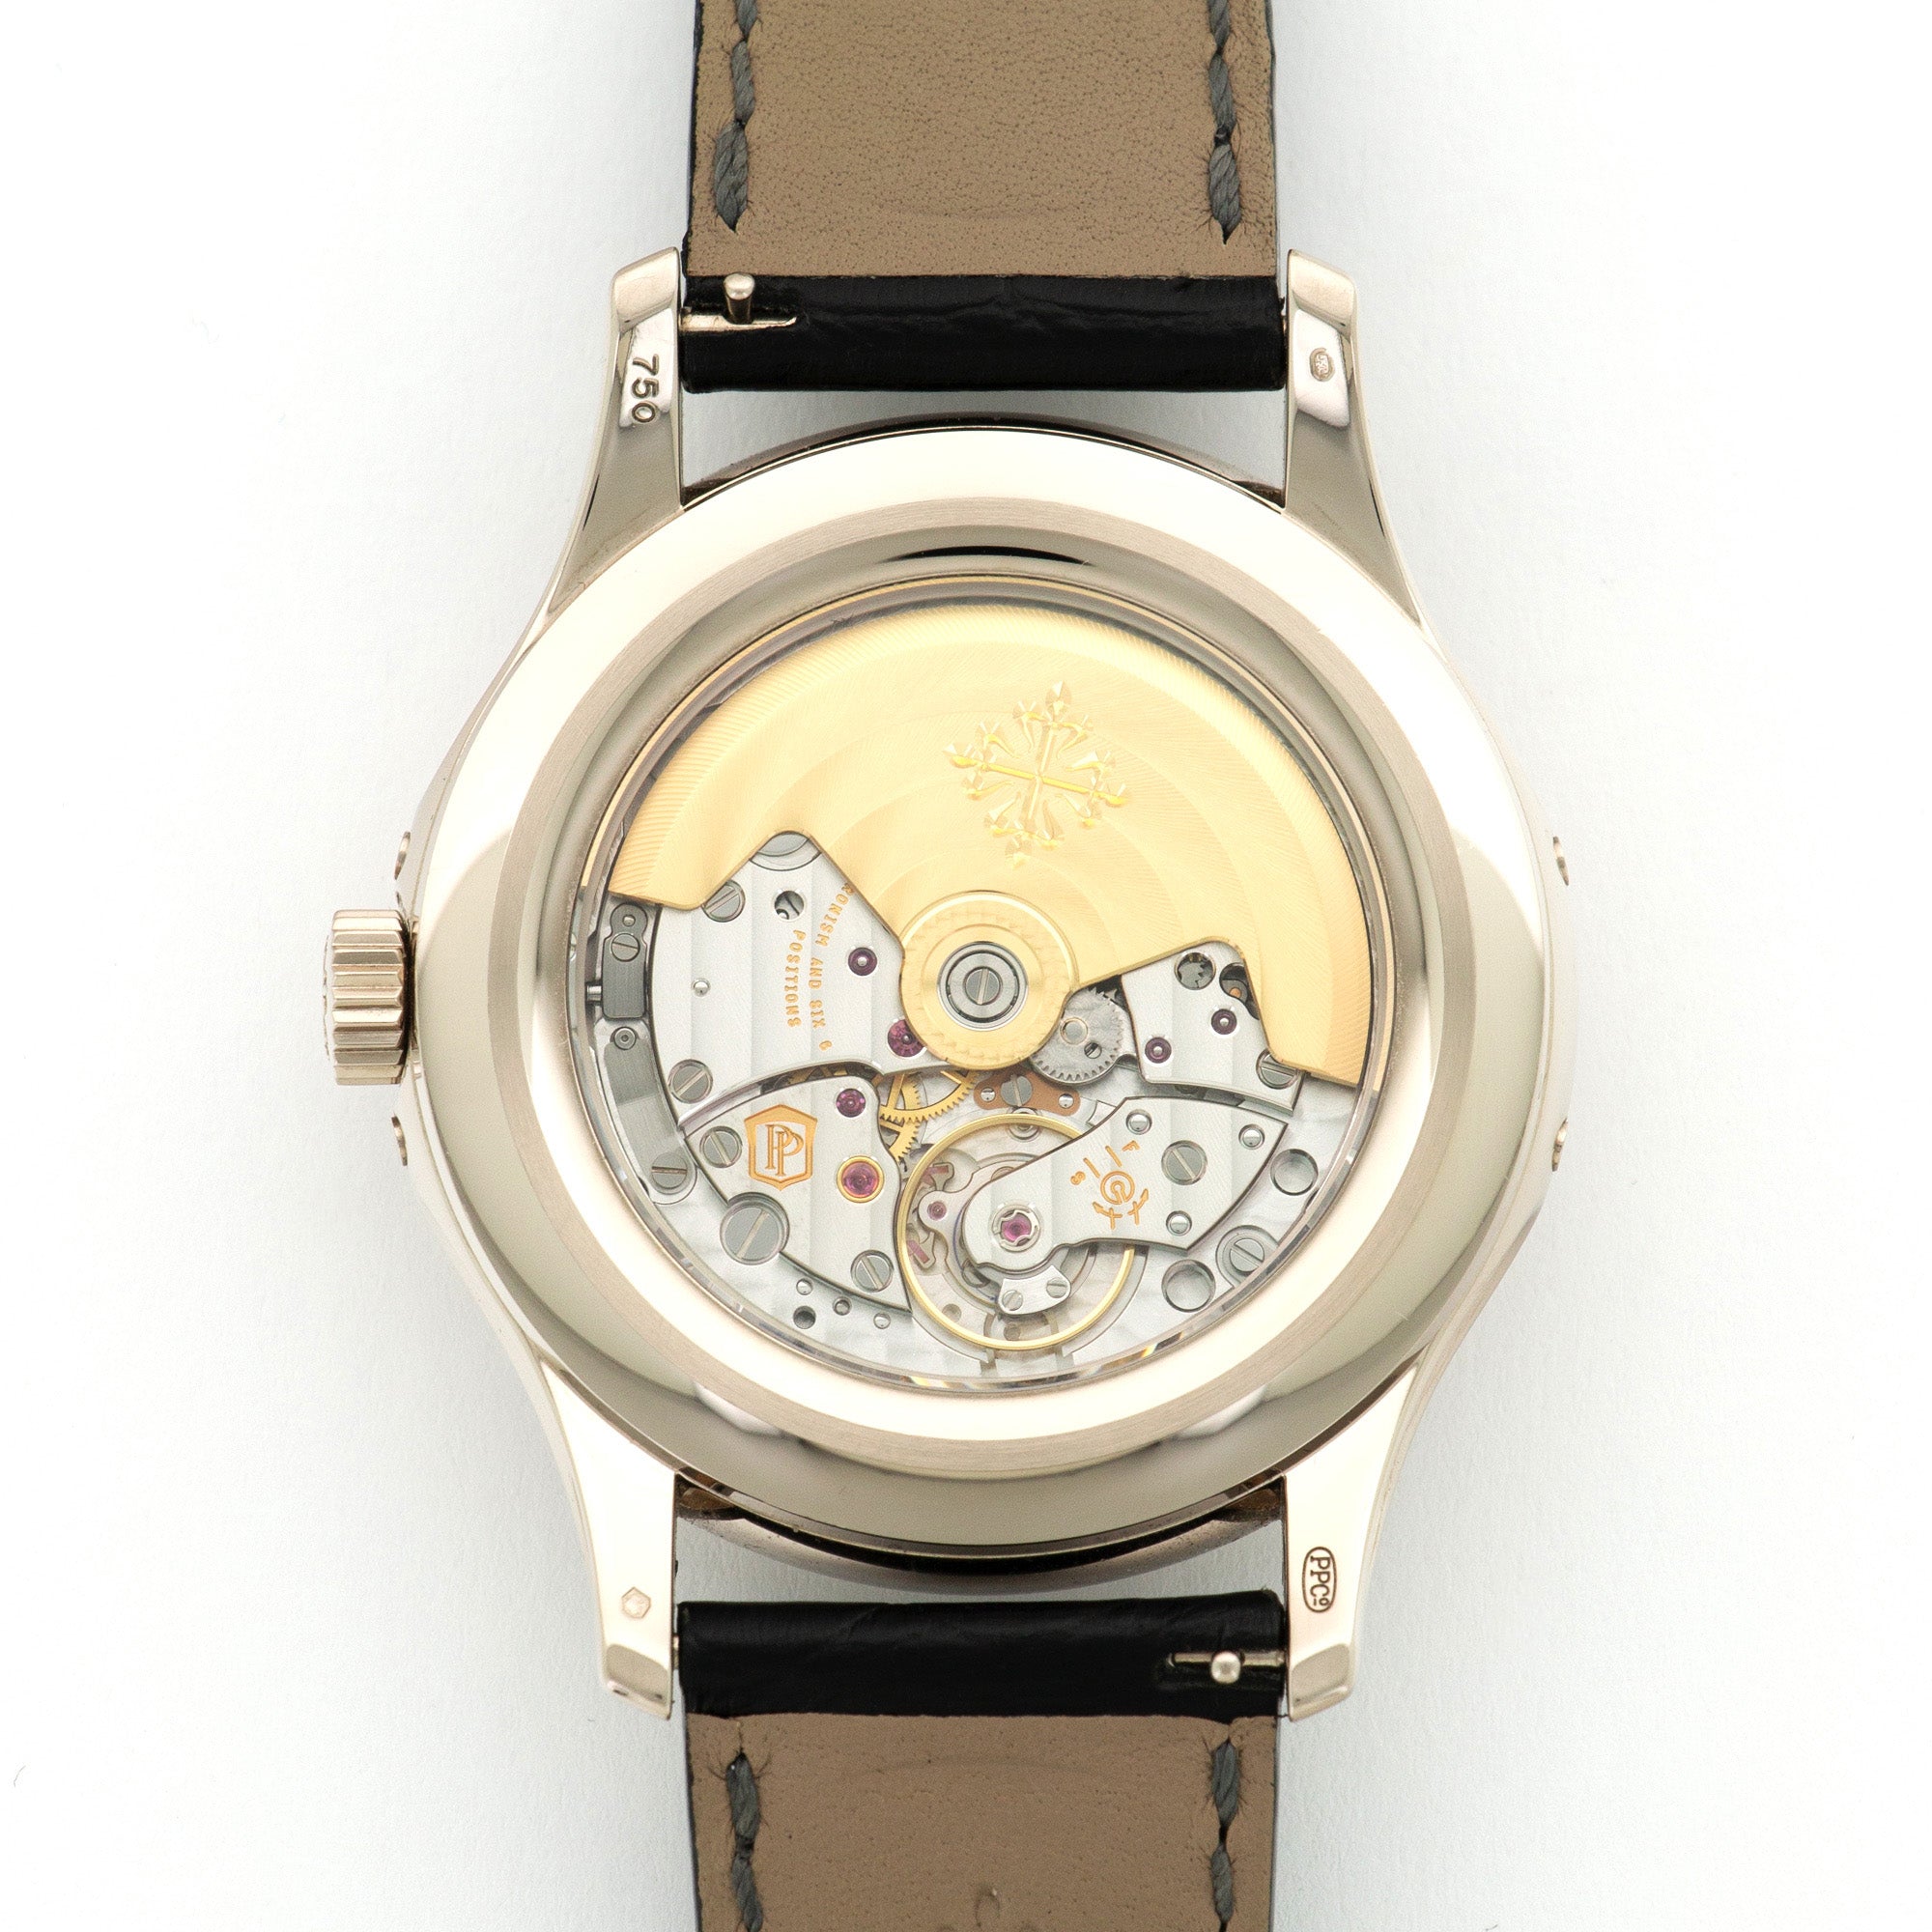 Patek Philippe White Gold Annual Calendar Moonphase Watch Ref. 5205